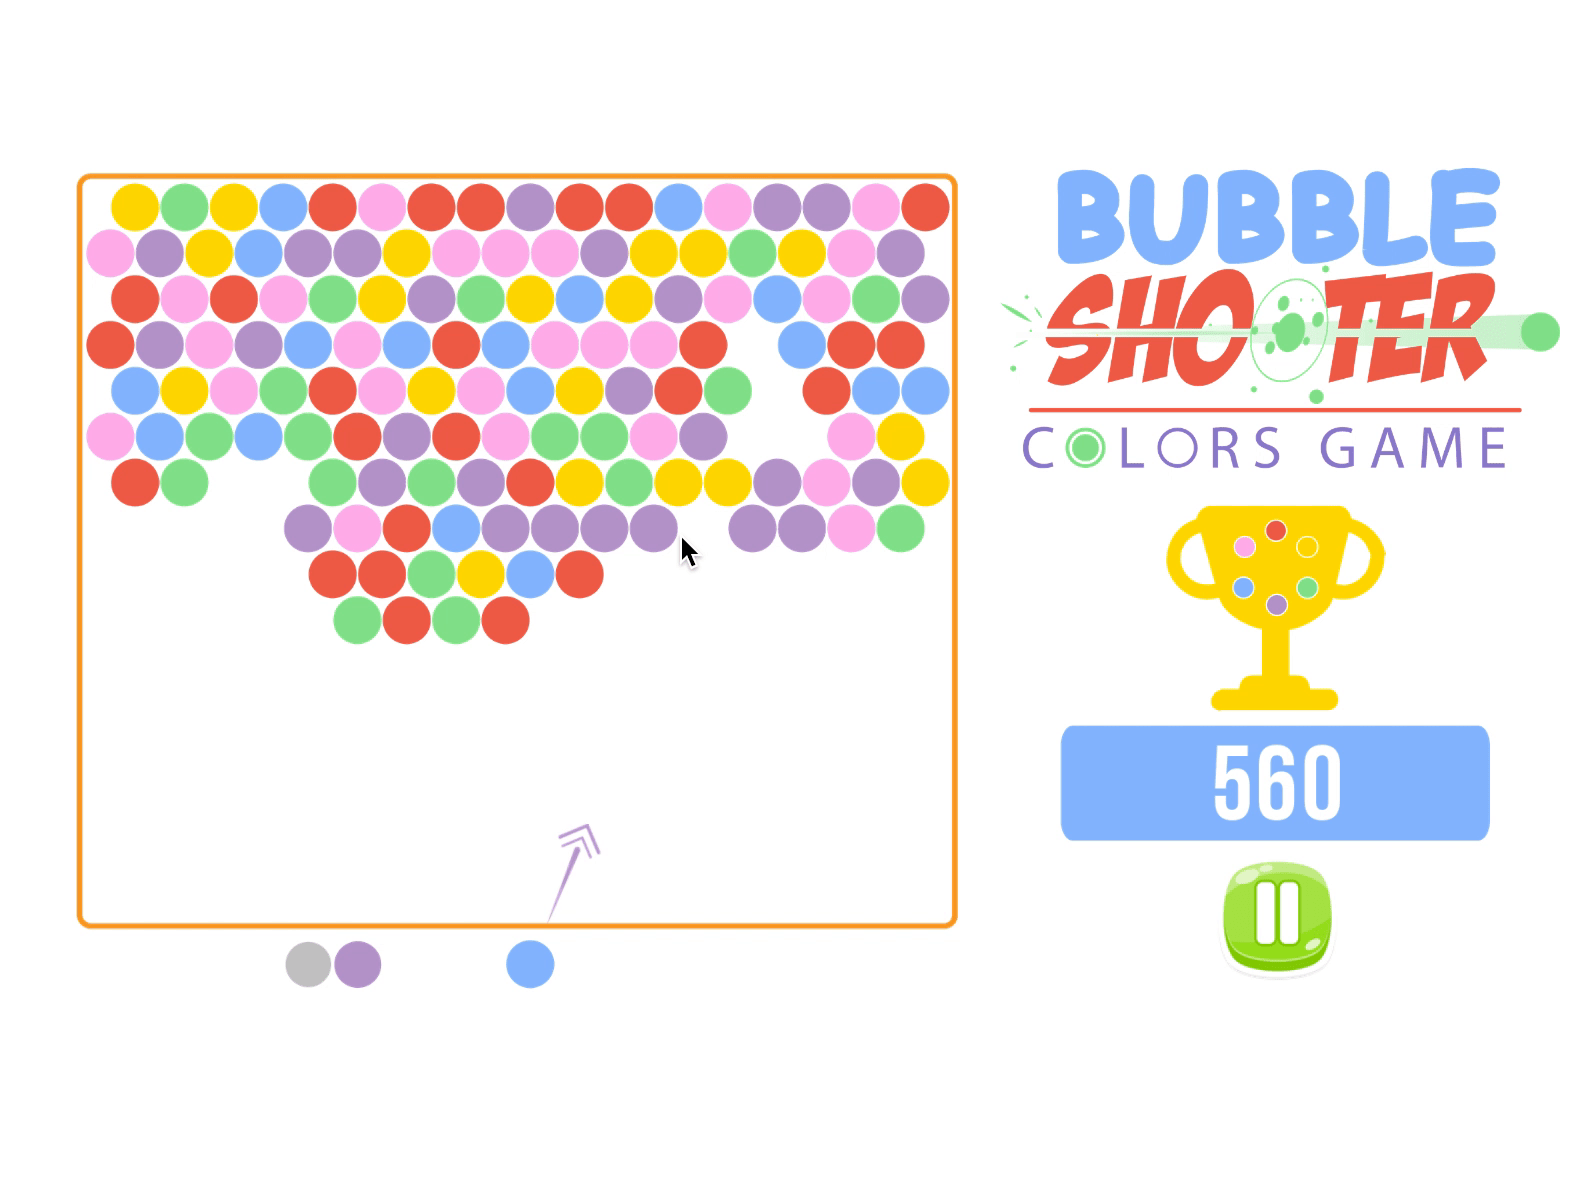 Bubble Shooter Colors Game Screenshot 1